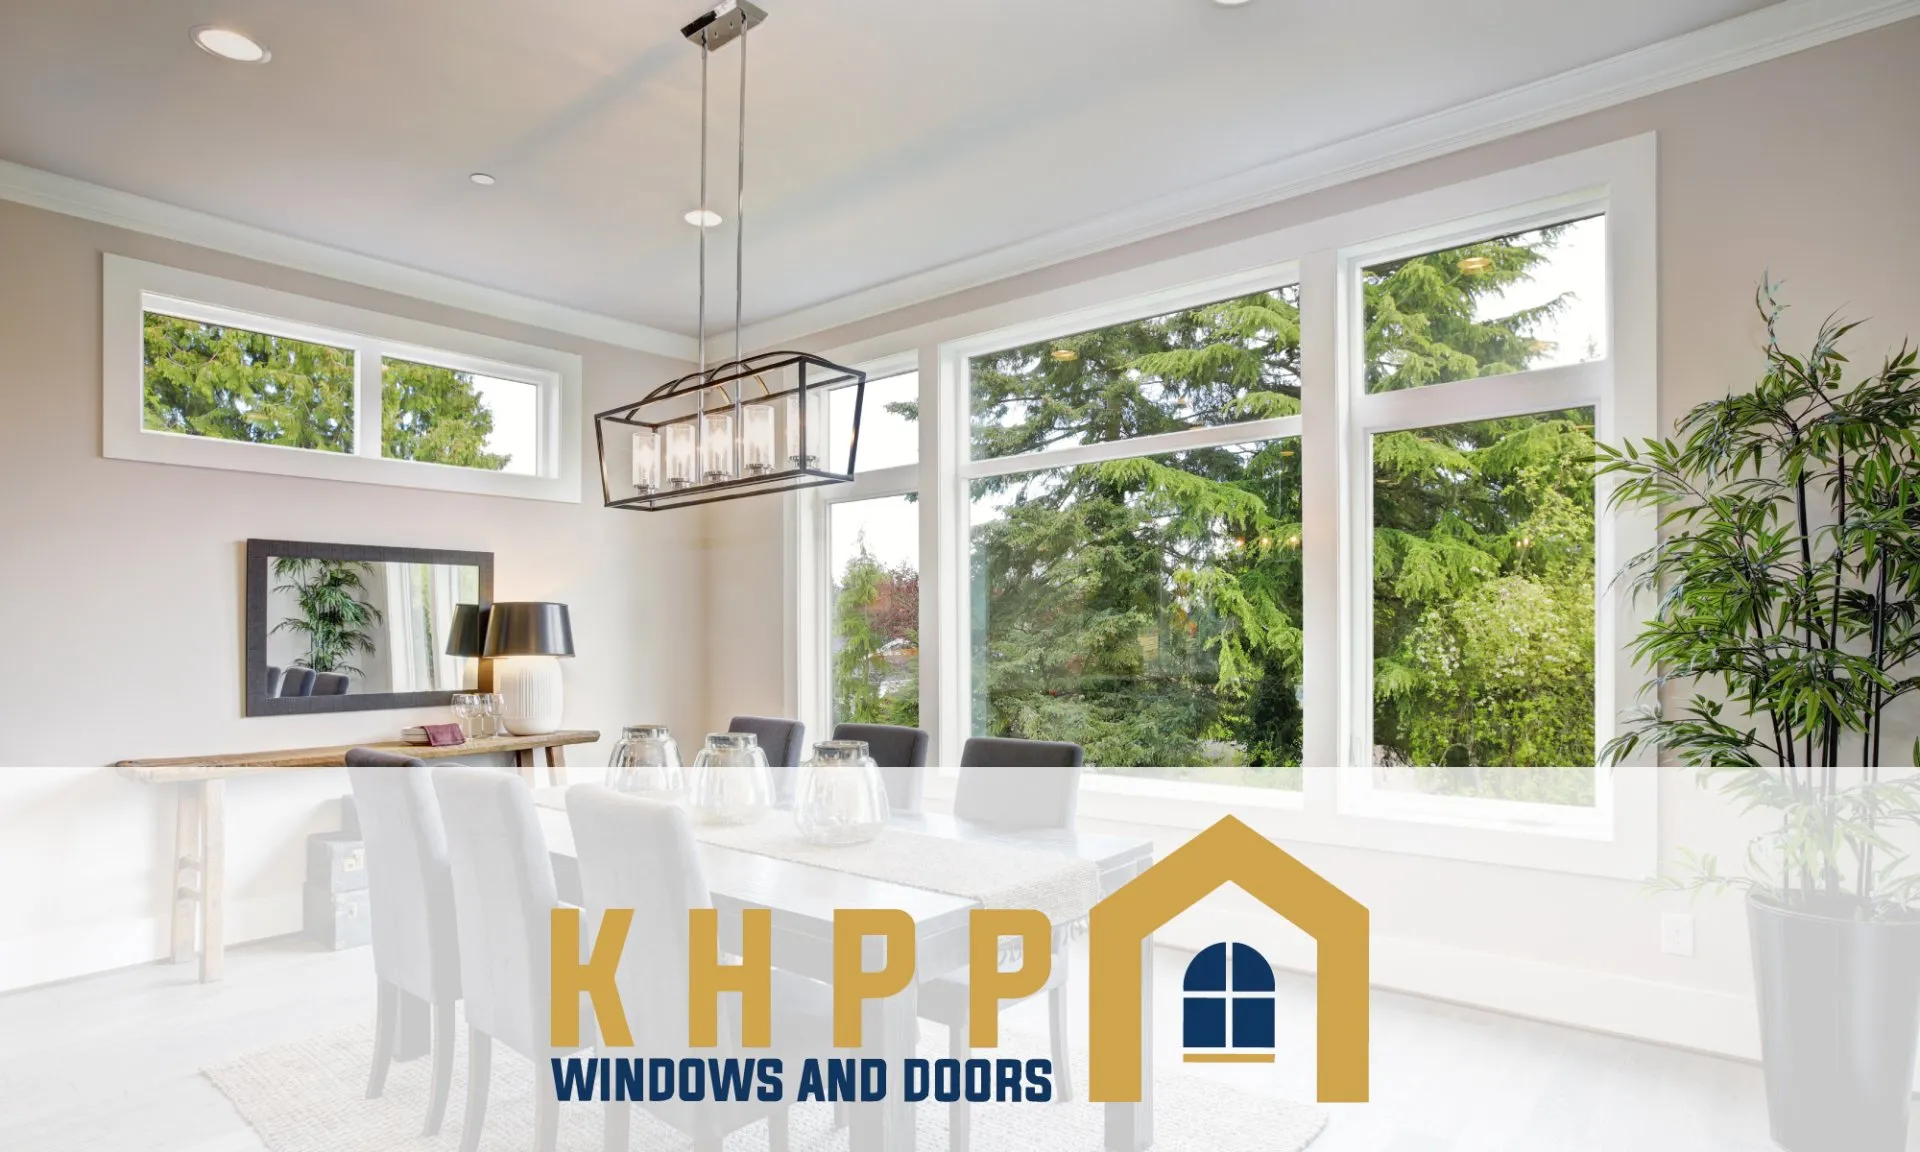 KPP windows and doors